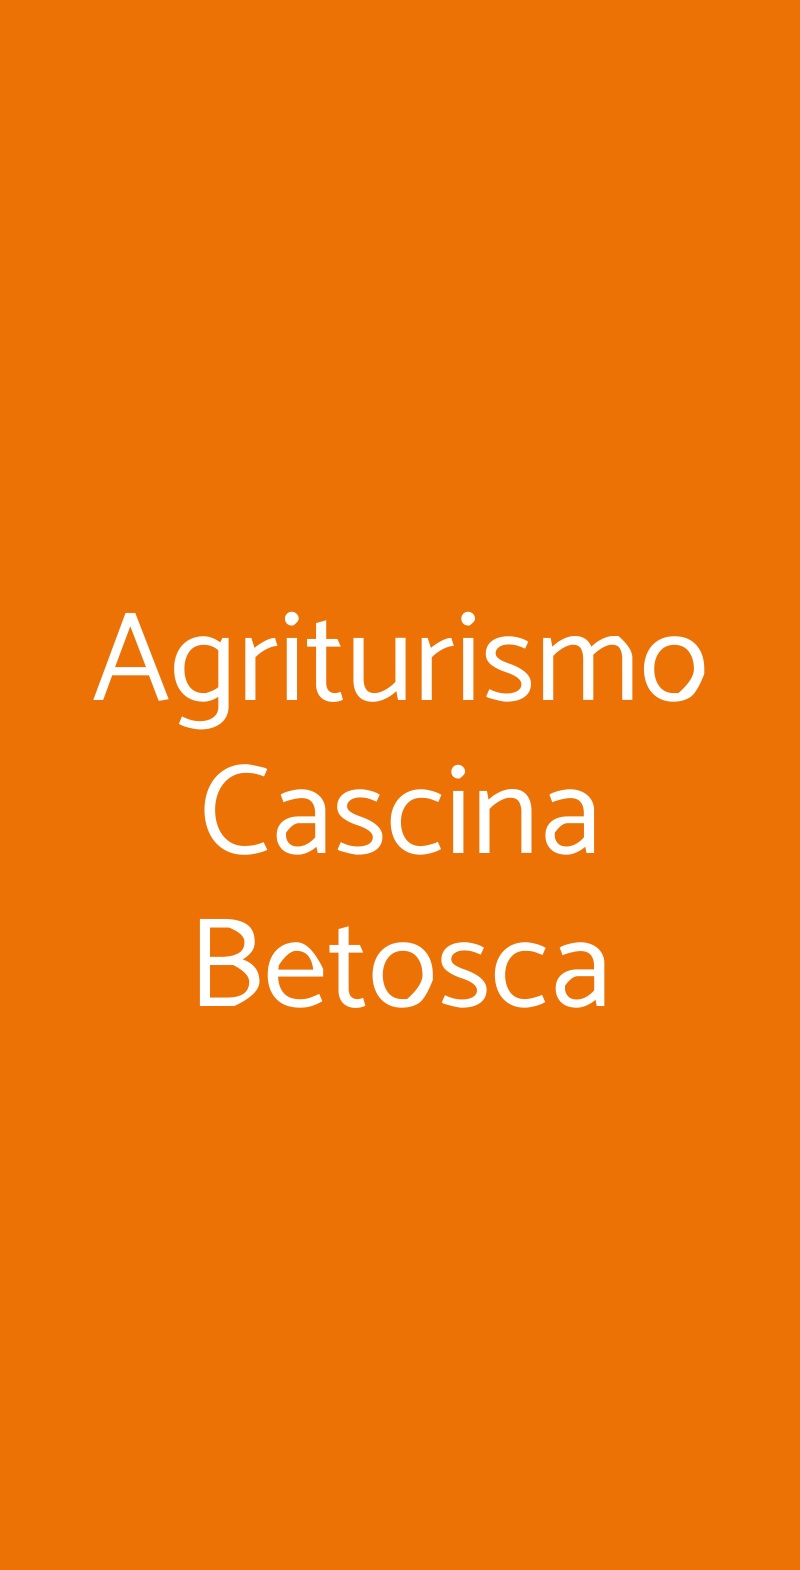 Agriturismo Cascina Betosca Cologno al Serio menù 1 pagina